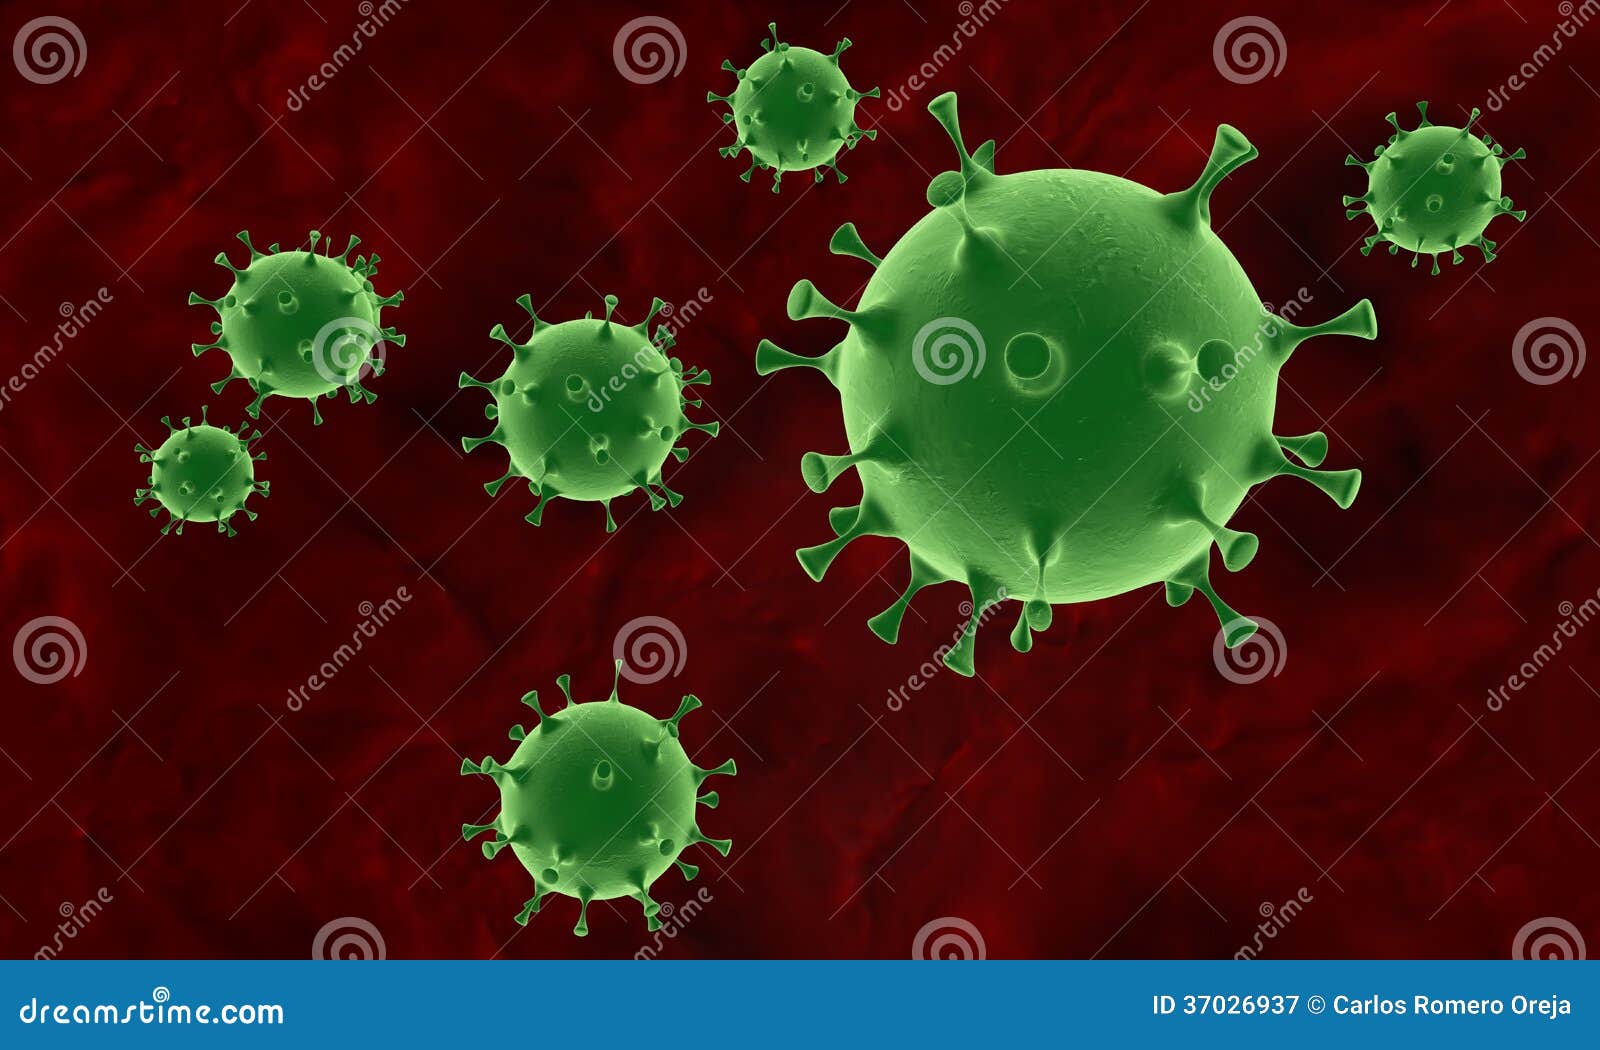 Virus making. Ядерный грипп. Изолят вируса гриппа фото. Как выглядит ядерный грипп.